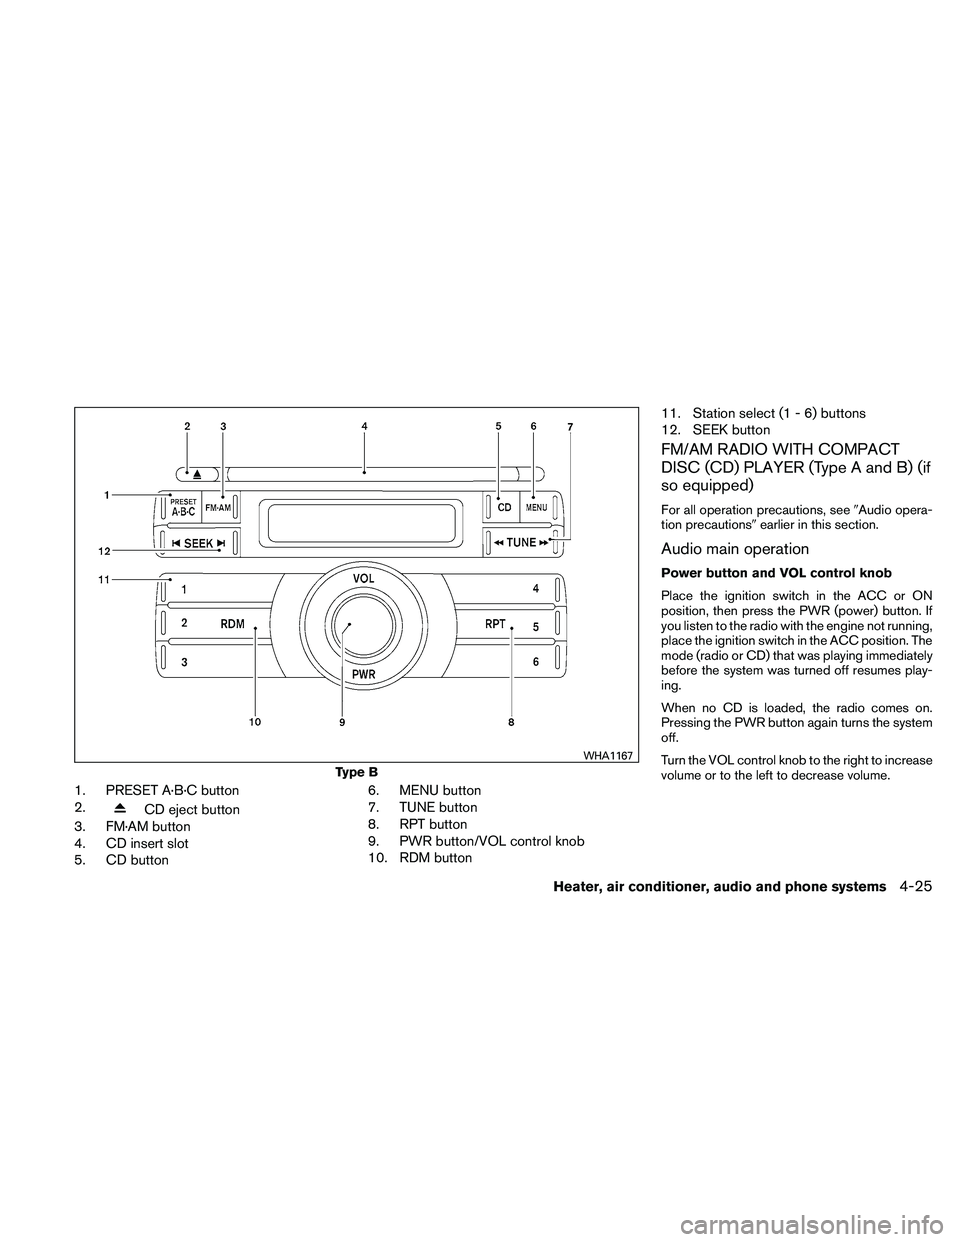 NISSAN FRONTIER 2011  Owner´s Manual 1. PRESET A·B·C button
2.
CD eject button
3. FM·AM button
4. CD insert slot
5. CD button 6. MENU button
7. TUNE button
8. RPT button
9. PWR button/VOL control knob
10. RDM button11. Station select 